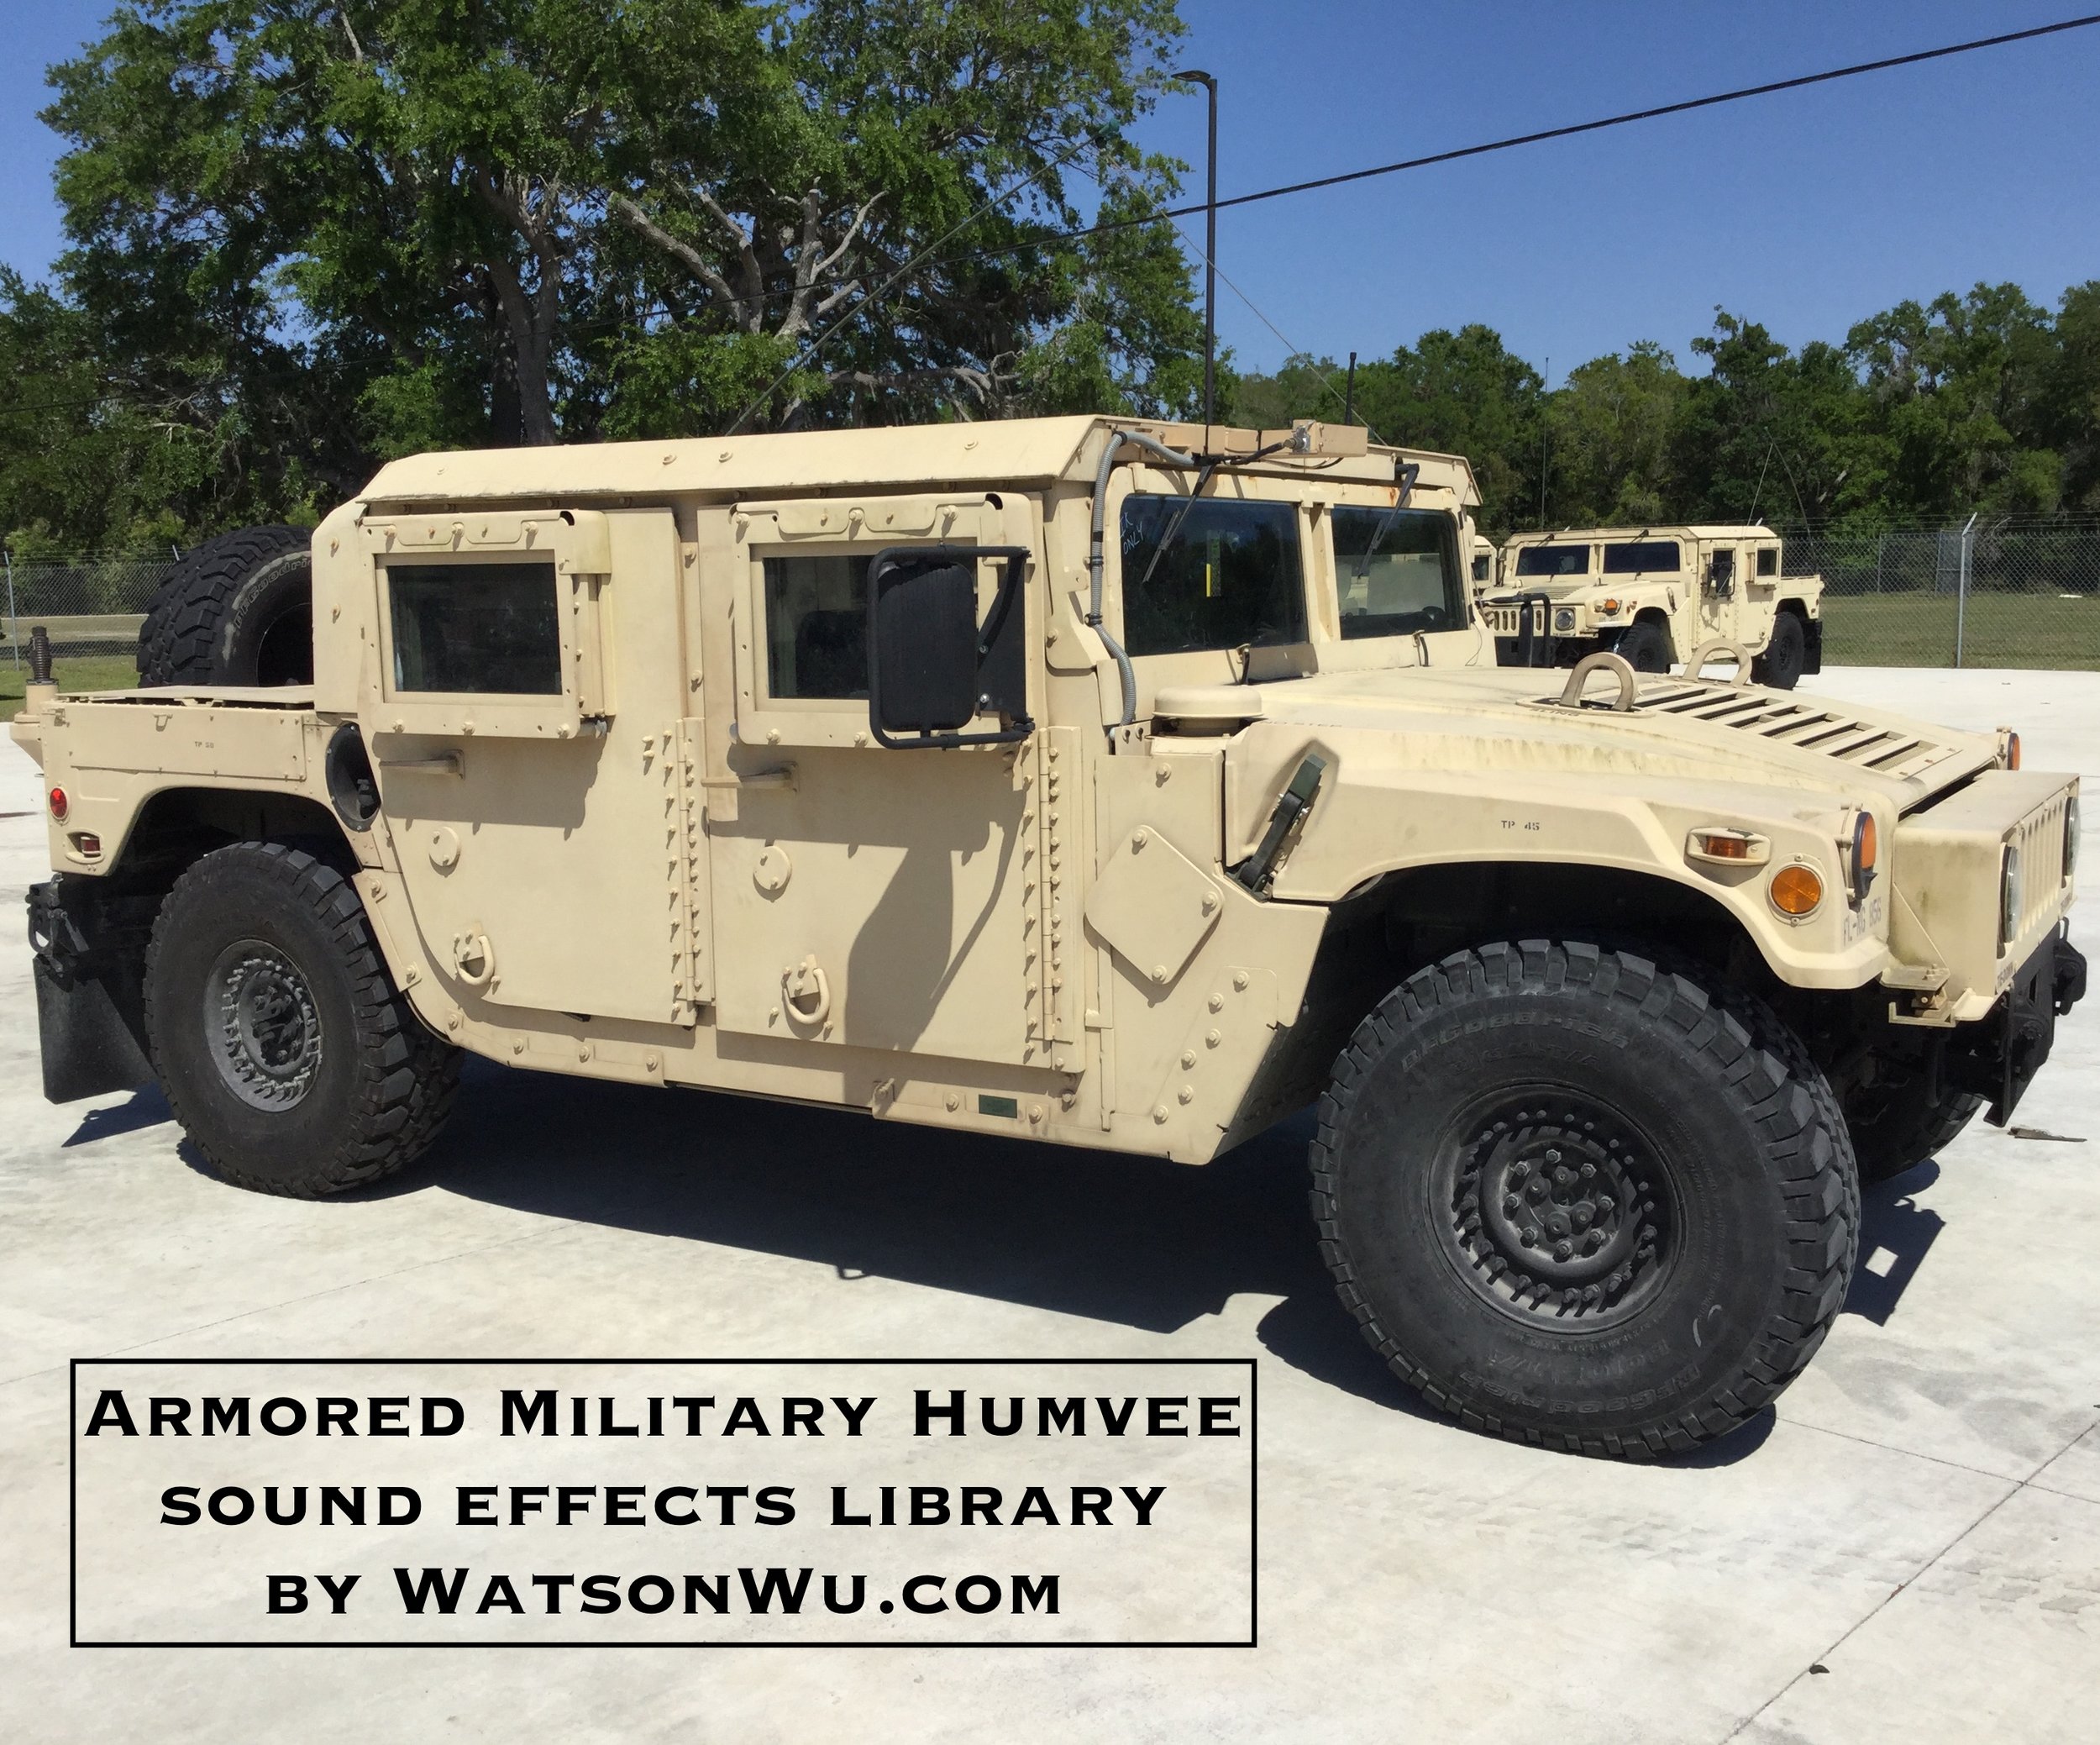 Military Humvee sfx library by WatsonWu.com text.JPG